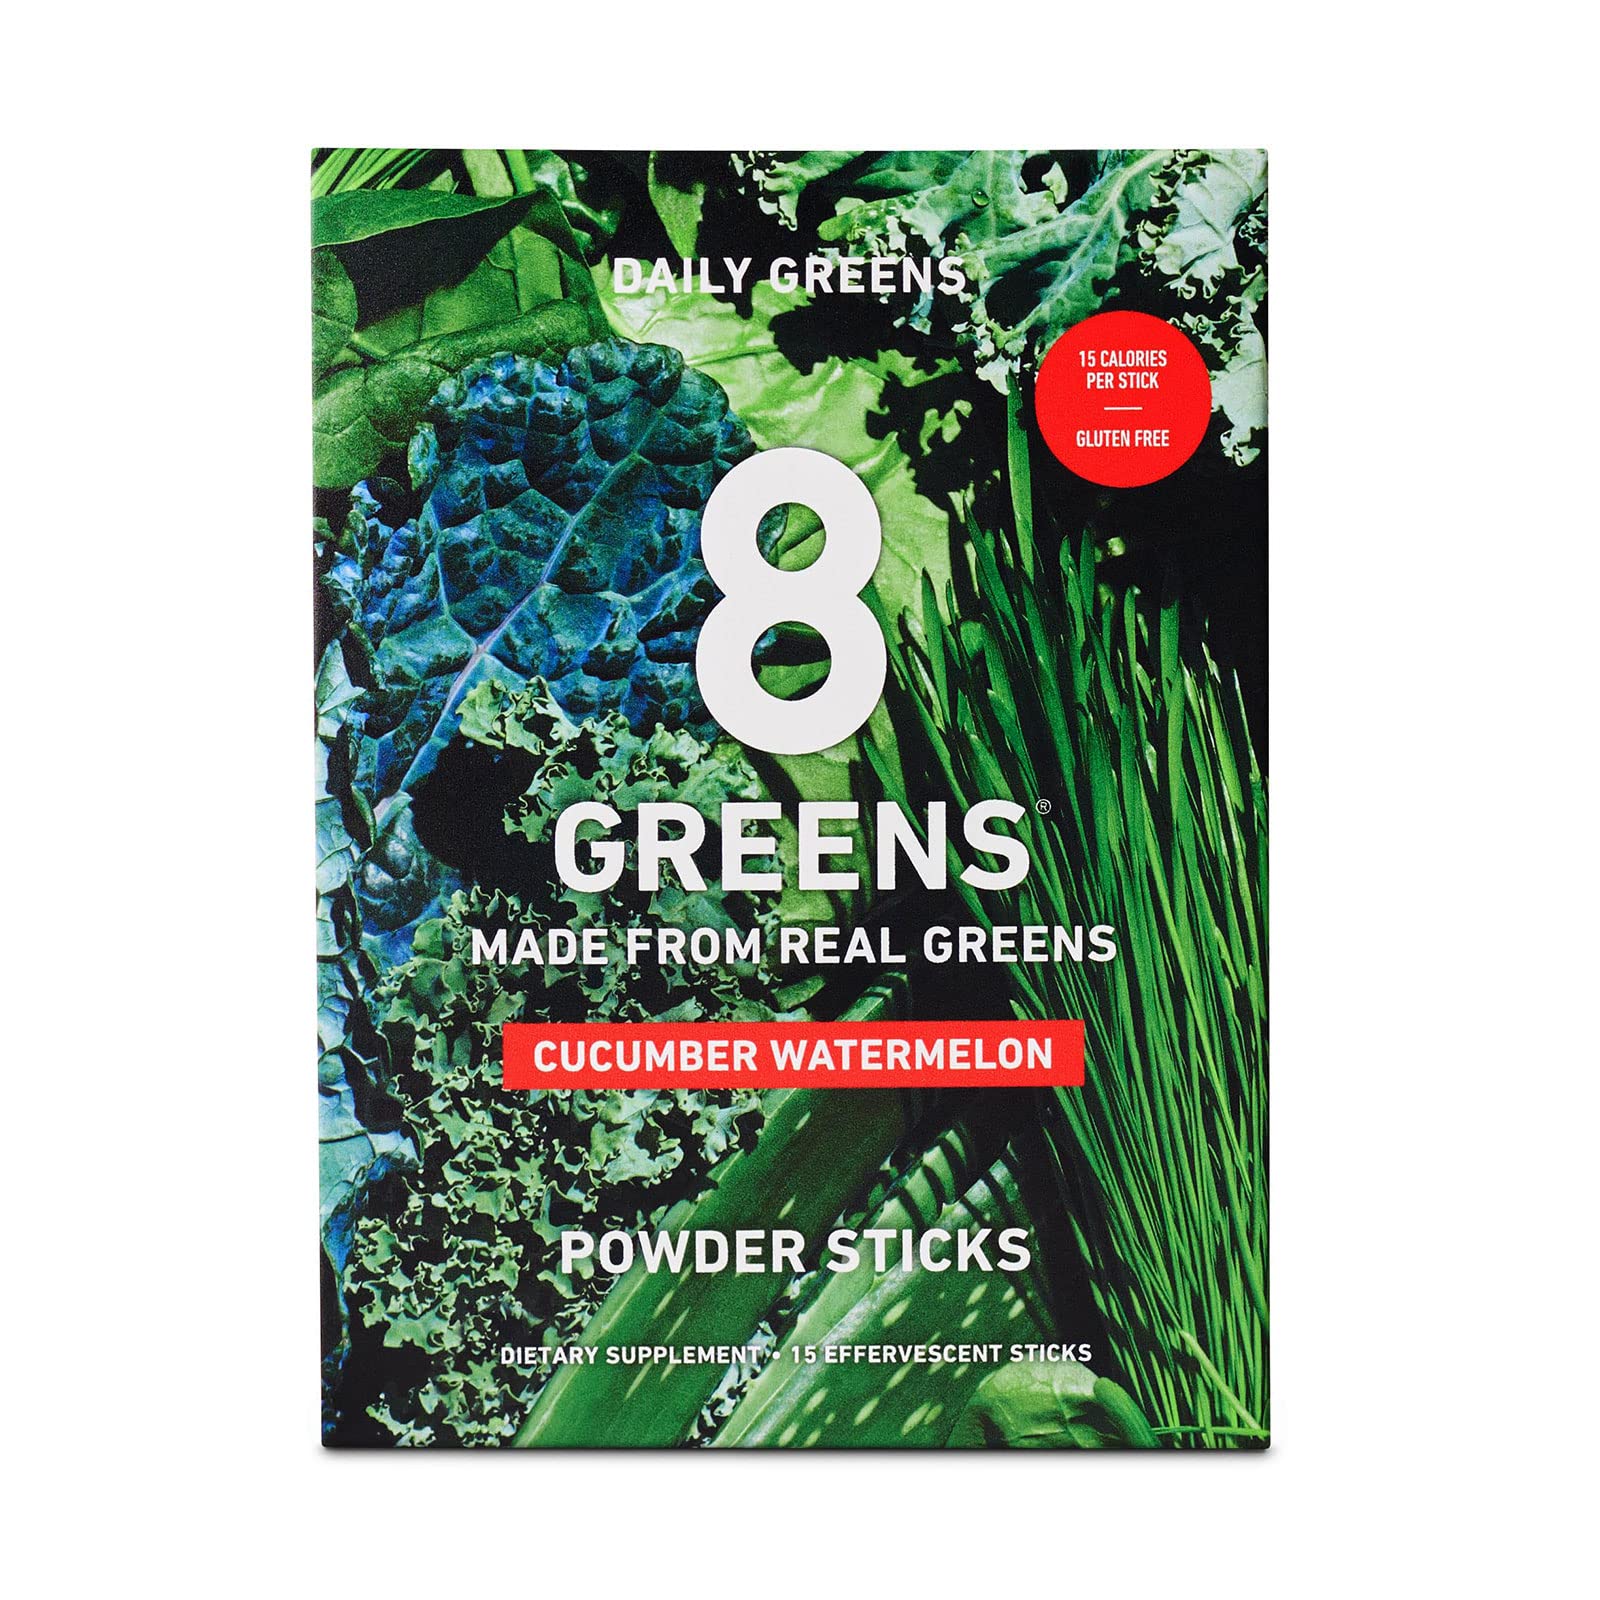 8Greens Daily Powder Sticks - Daily Superfood- Super Greens Vitamins, Vegan, Gluten Free, Non-GMO, Variety Pack (Pack of 15 Sticks)